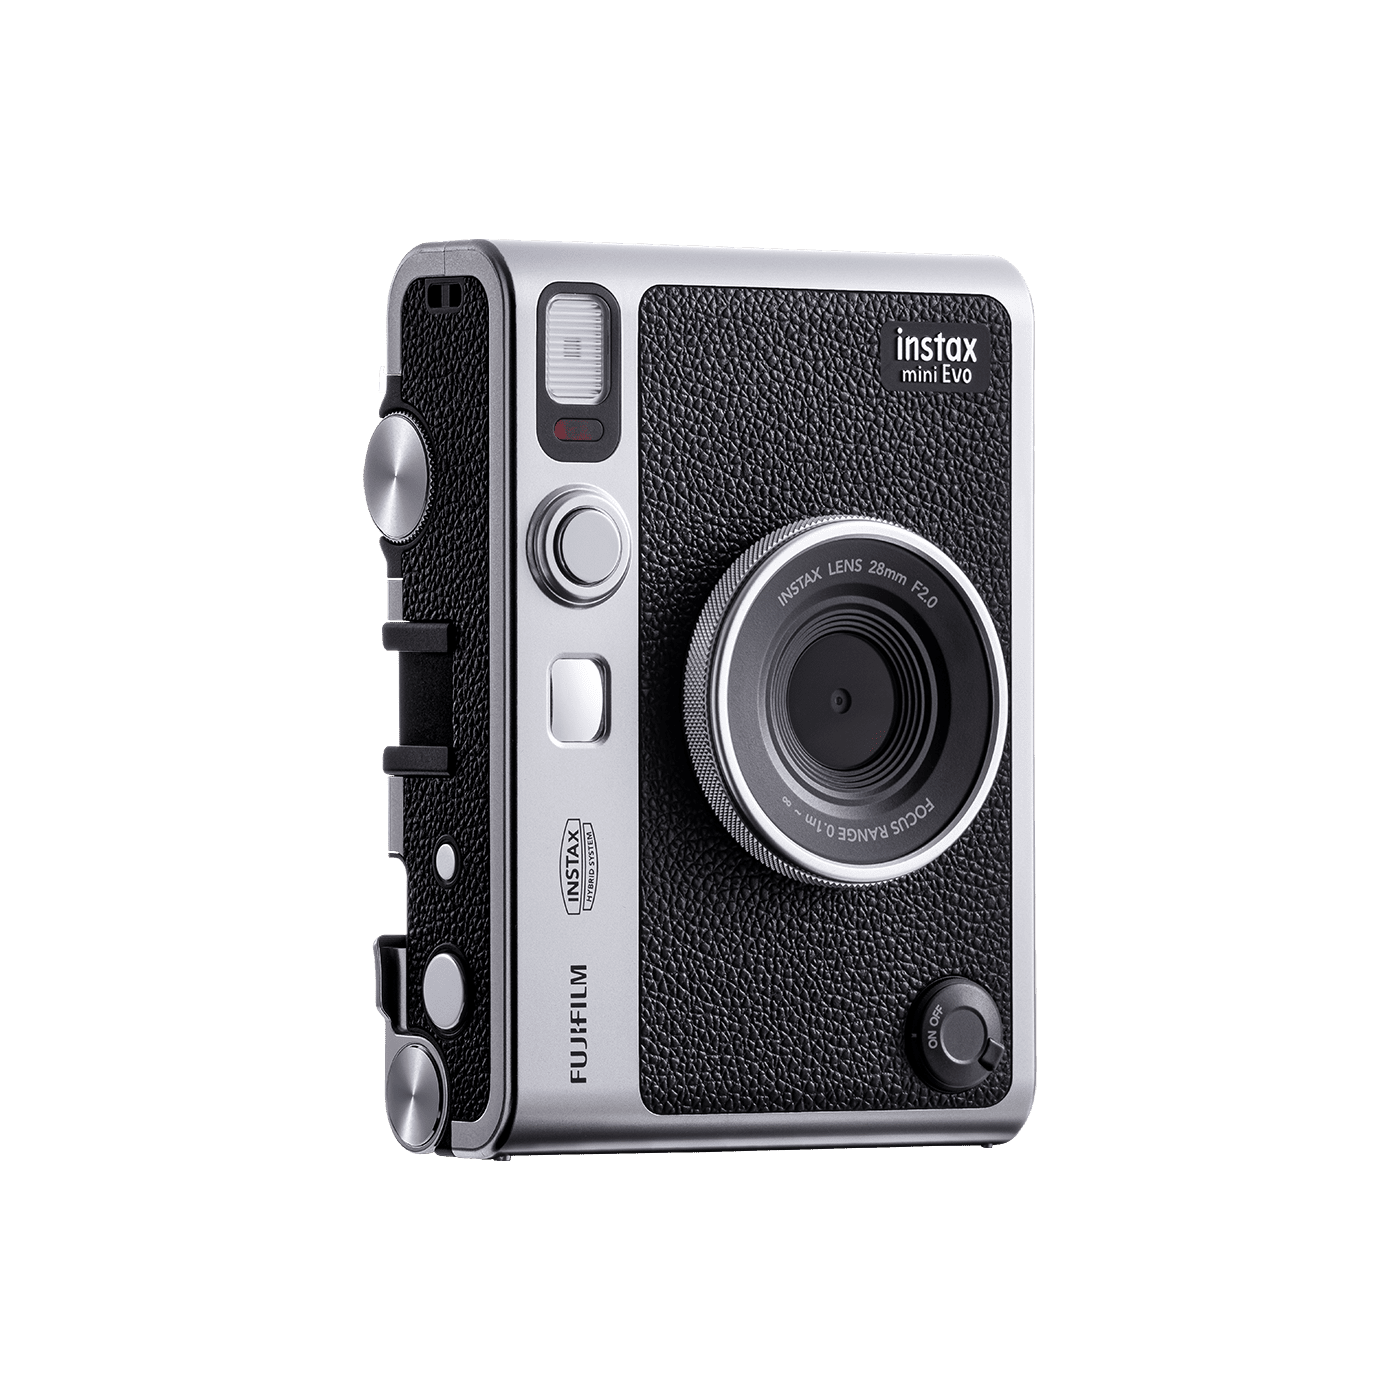 Fujifilm Instax Mini 40 Instant Camera Kit with Case and Film - Black